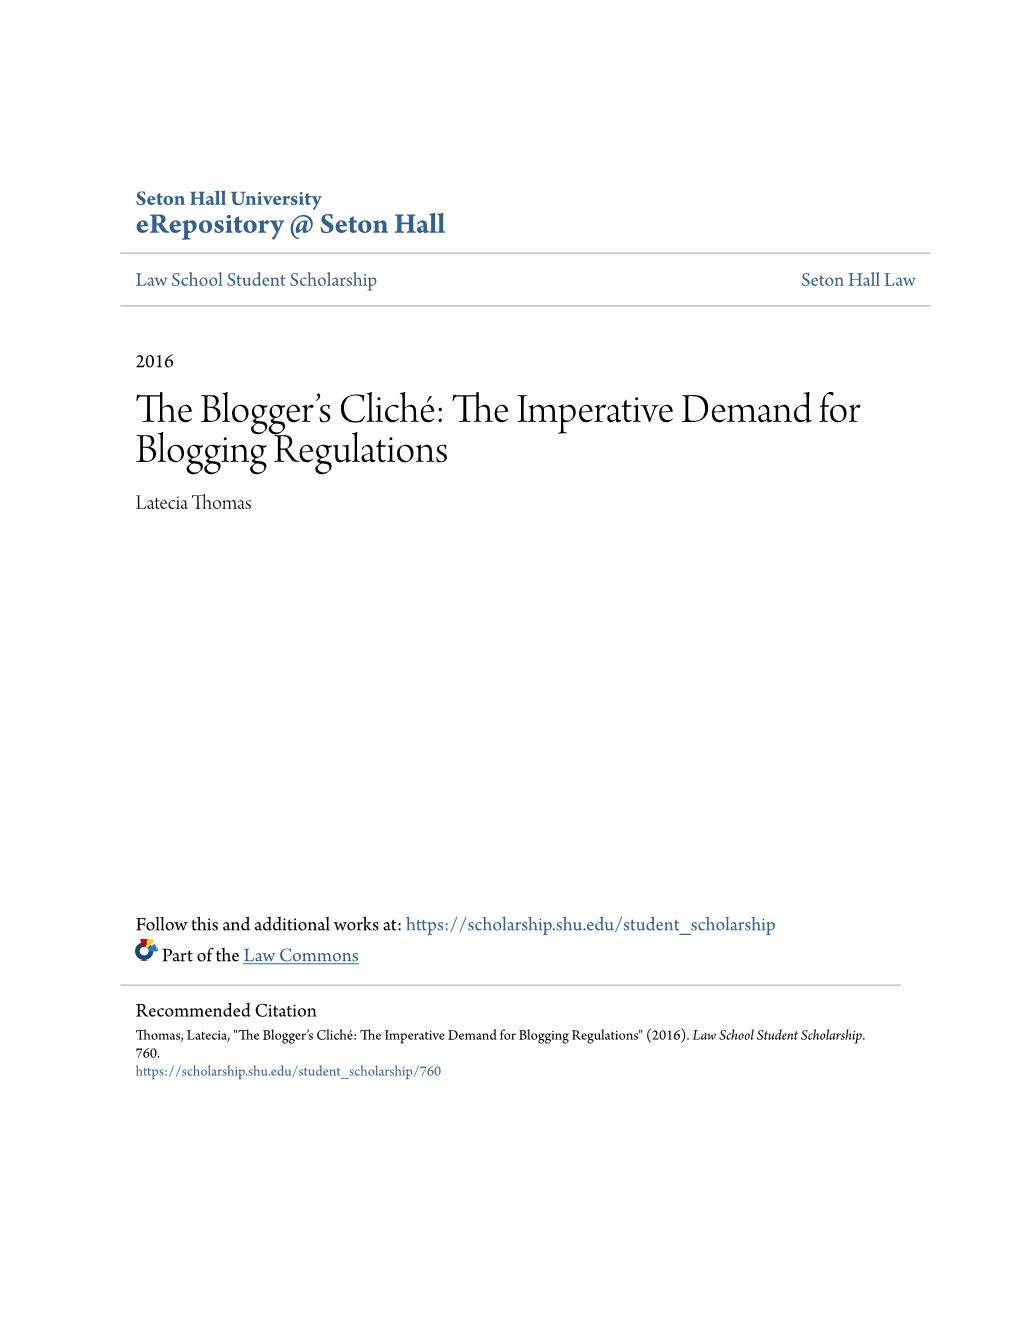 The Imperative Demand for Blogging Regulations